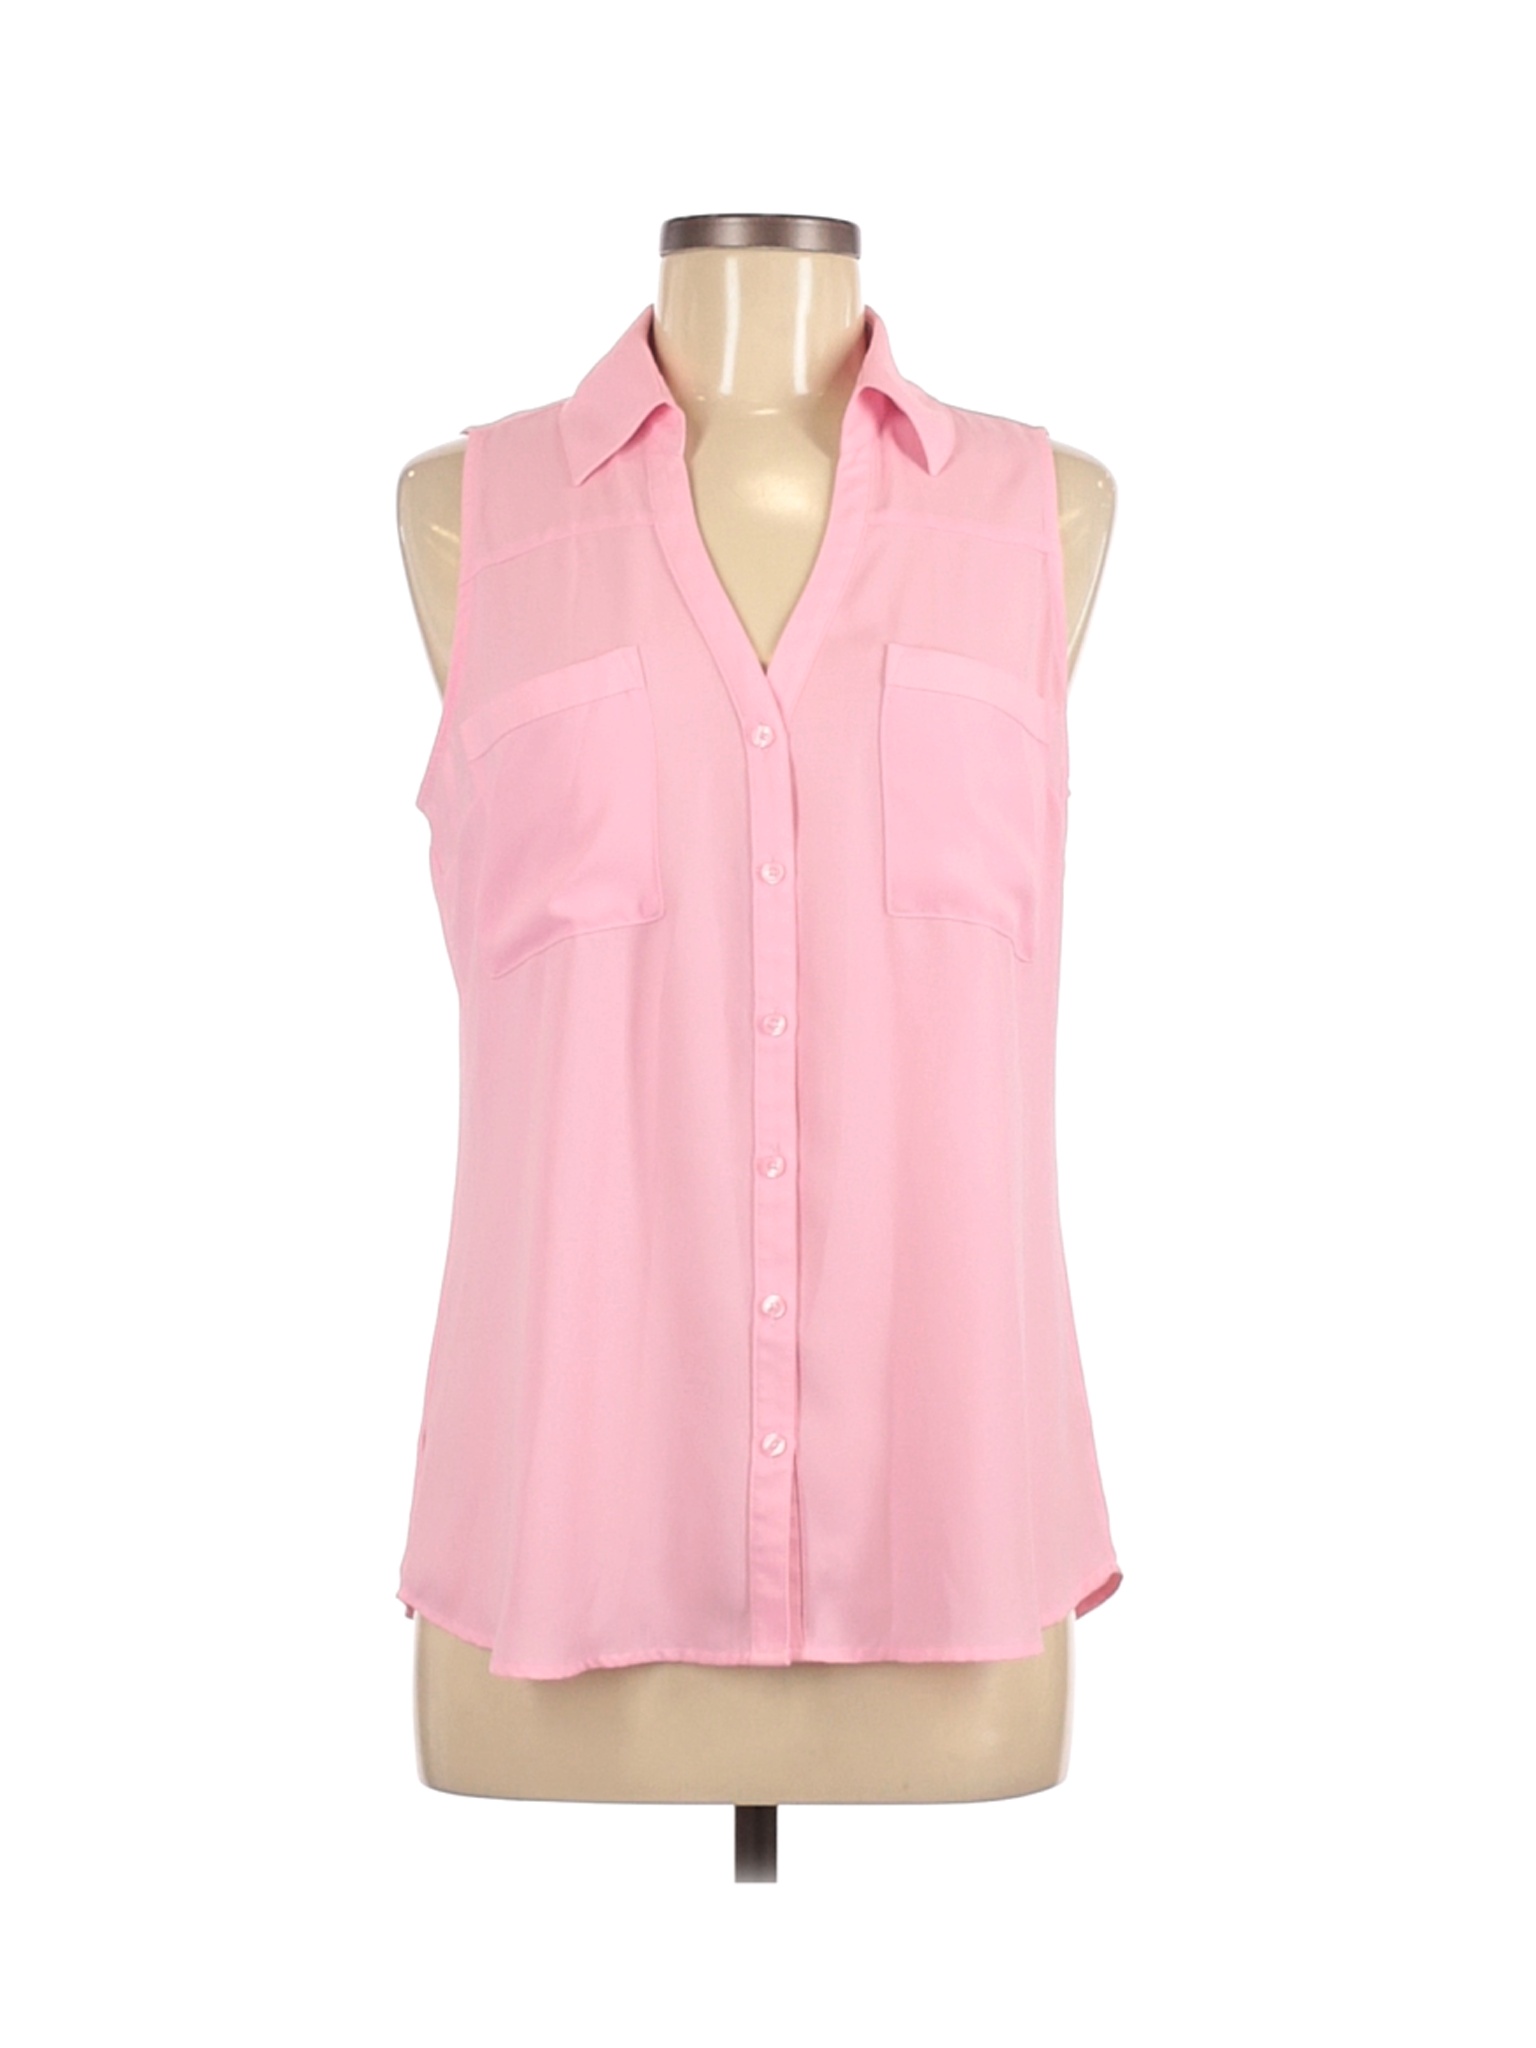 Express Women Pink Sleeveless Blouse M | eBay